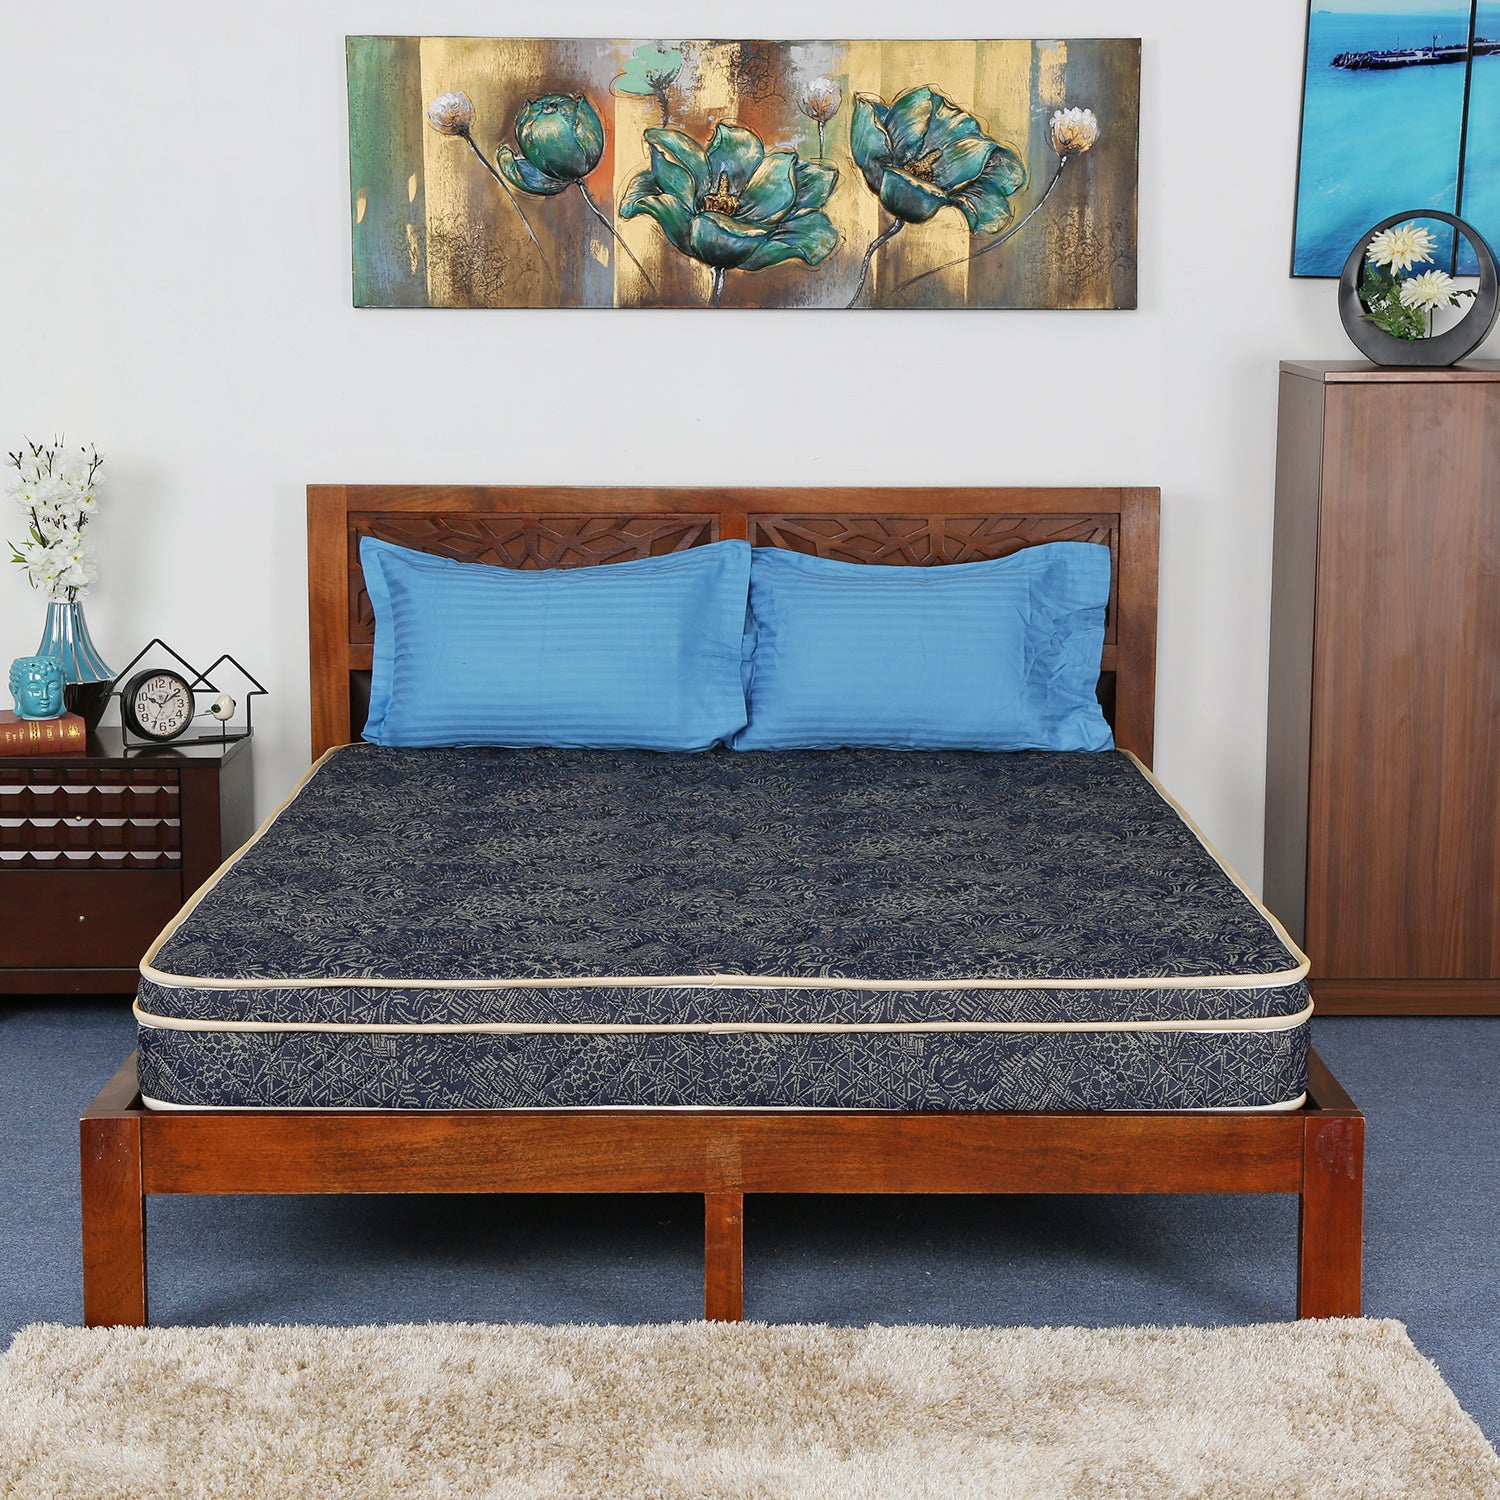 Prime Box Top 6 inch Queen Bed Coir Mattress (Blue)